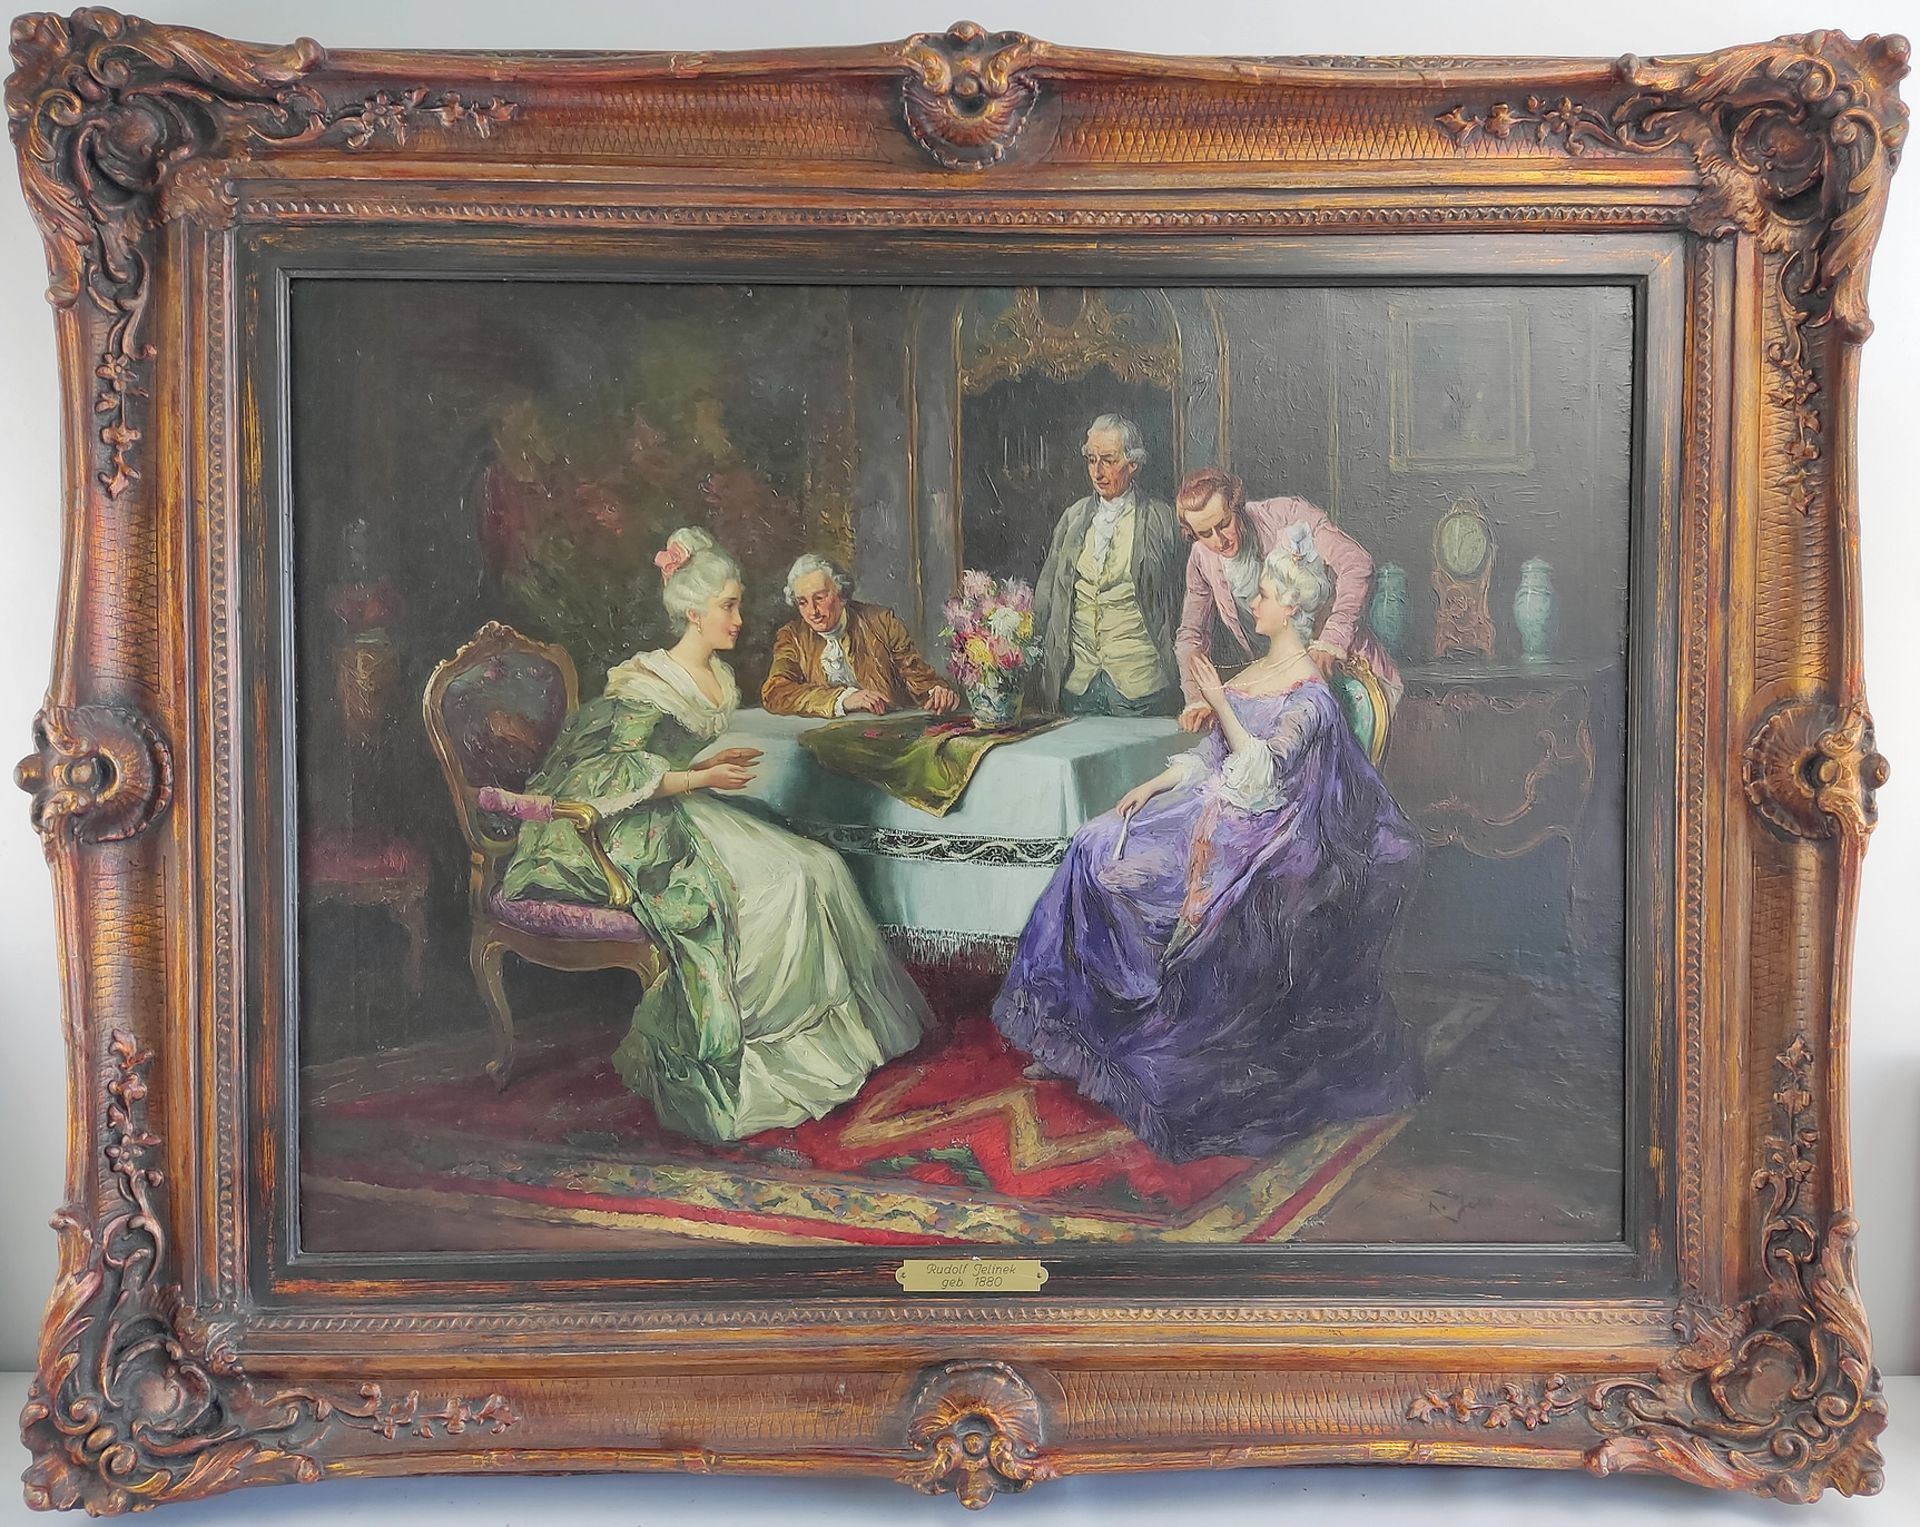 Rudolf Jelinek (c.1880-1950) "Feine Gesellschaft im Salon", 58x79 cm